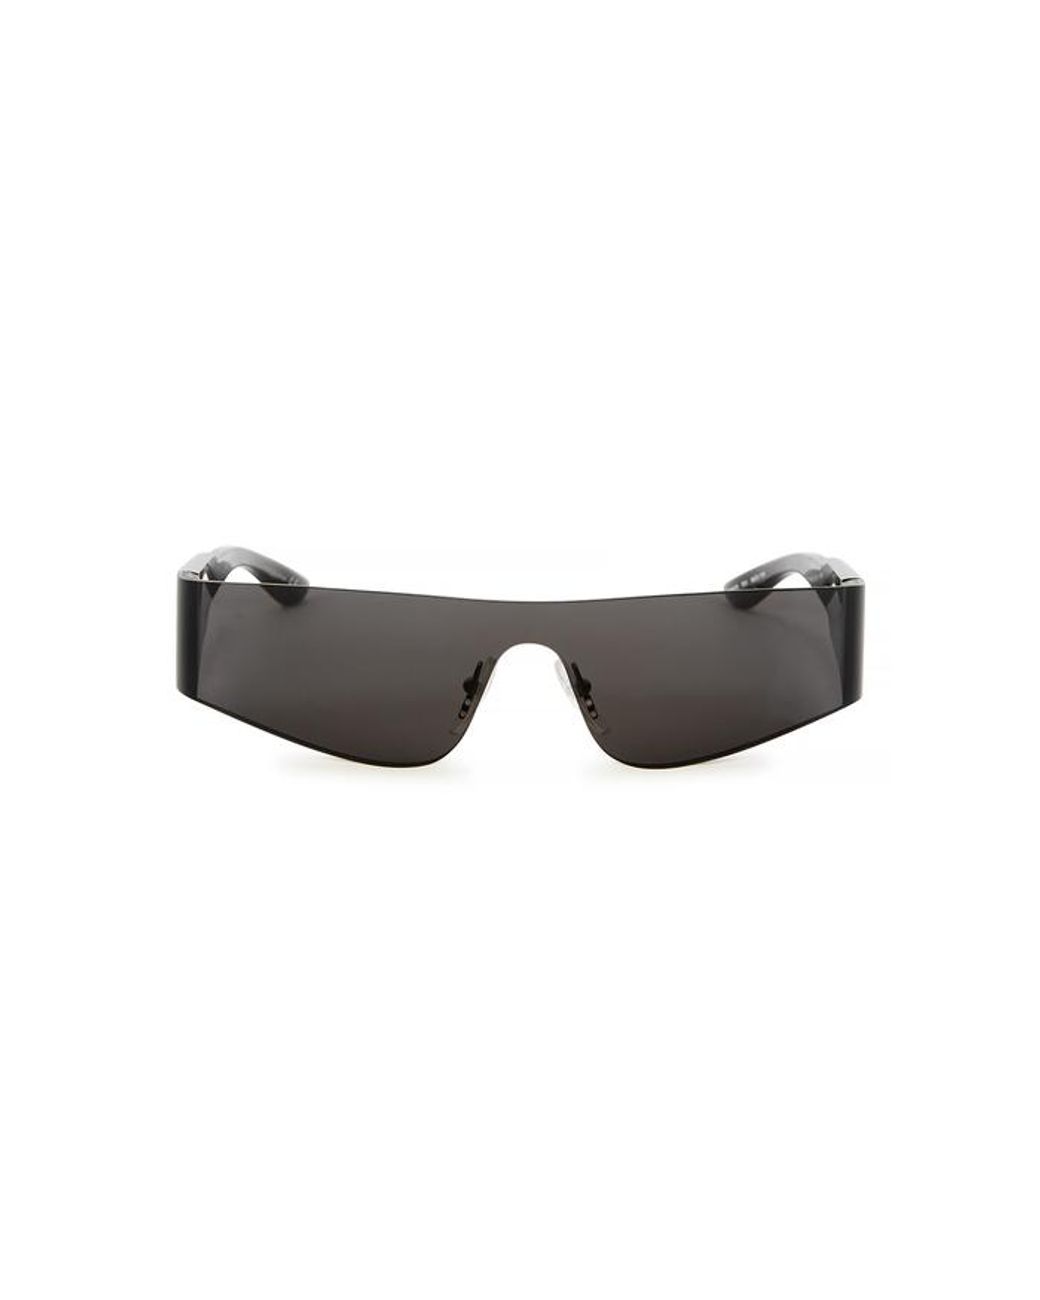 Balenciaga Charcoal Wrap-around Sunglasses in Gray